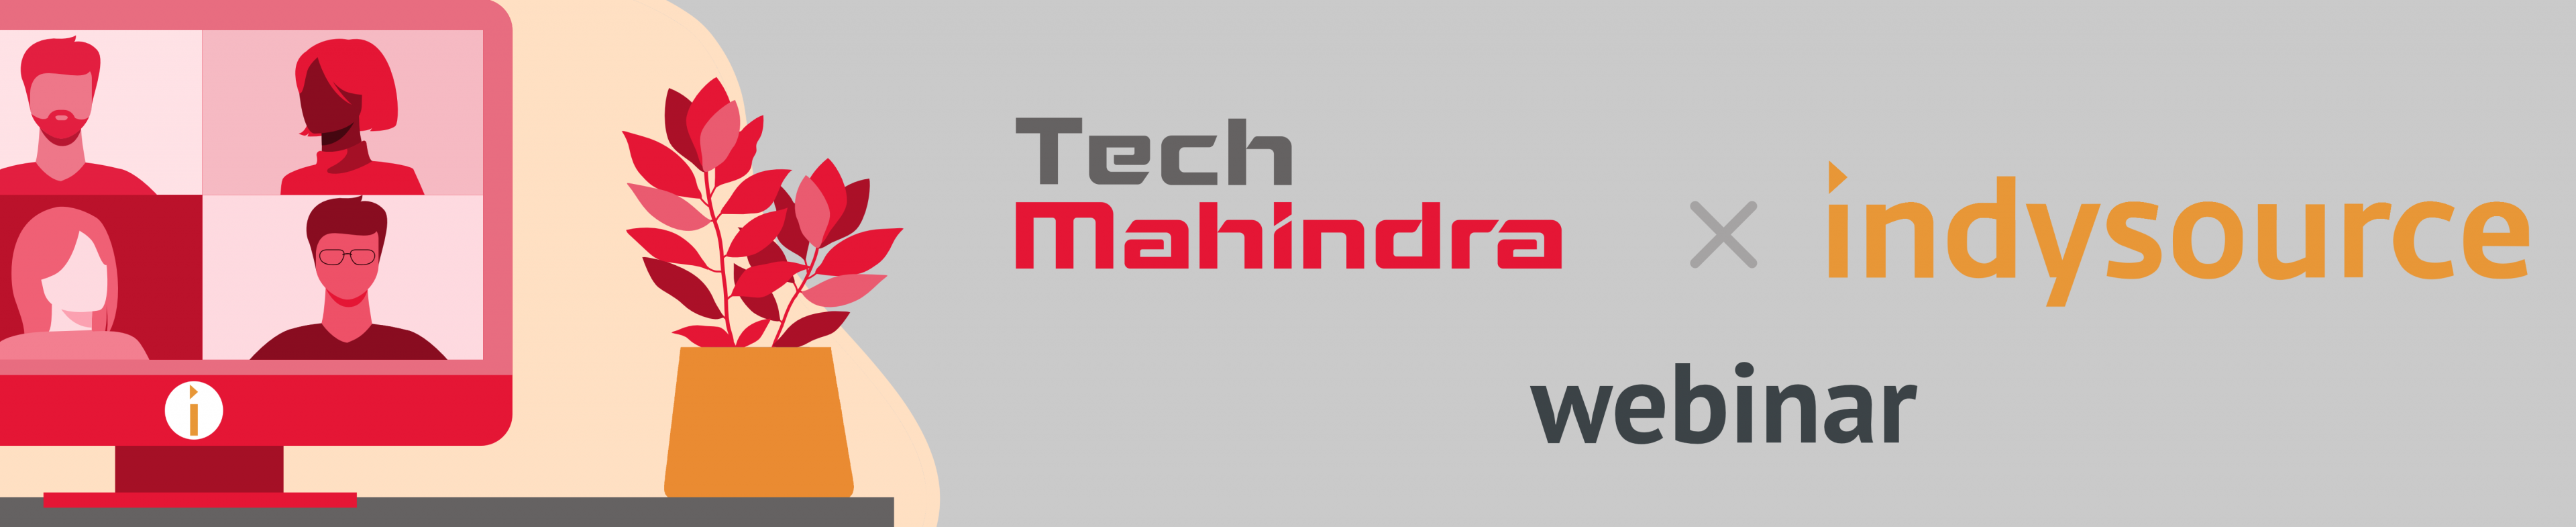 Tech Mahindra 2021 Business Update